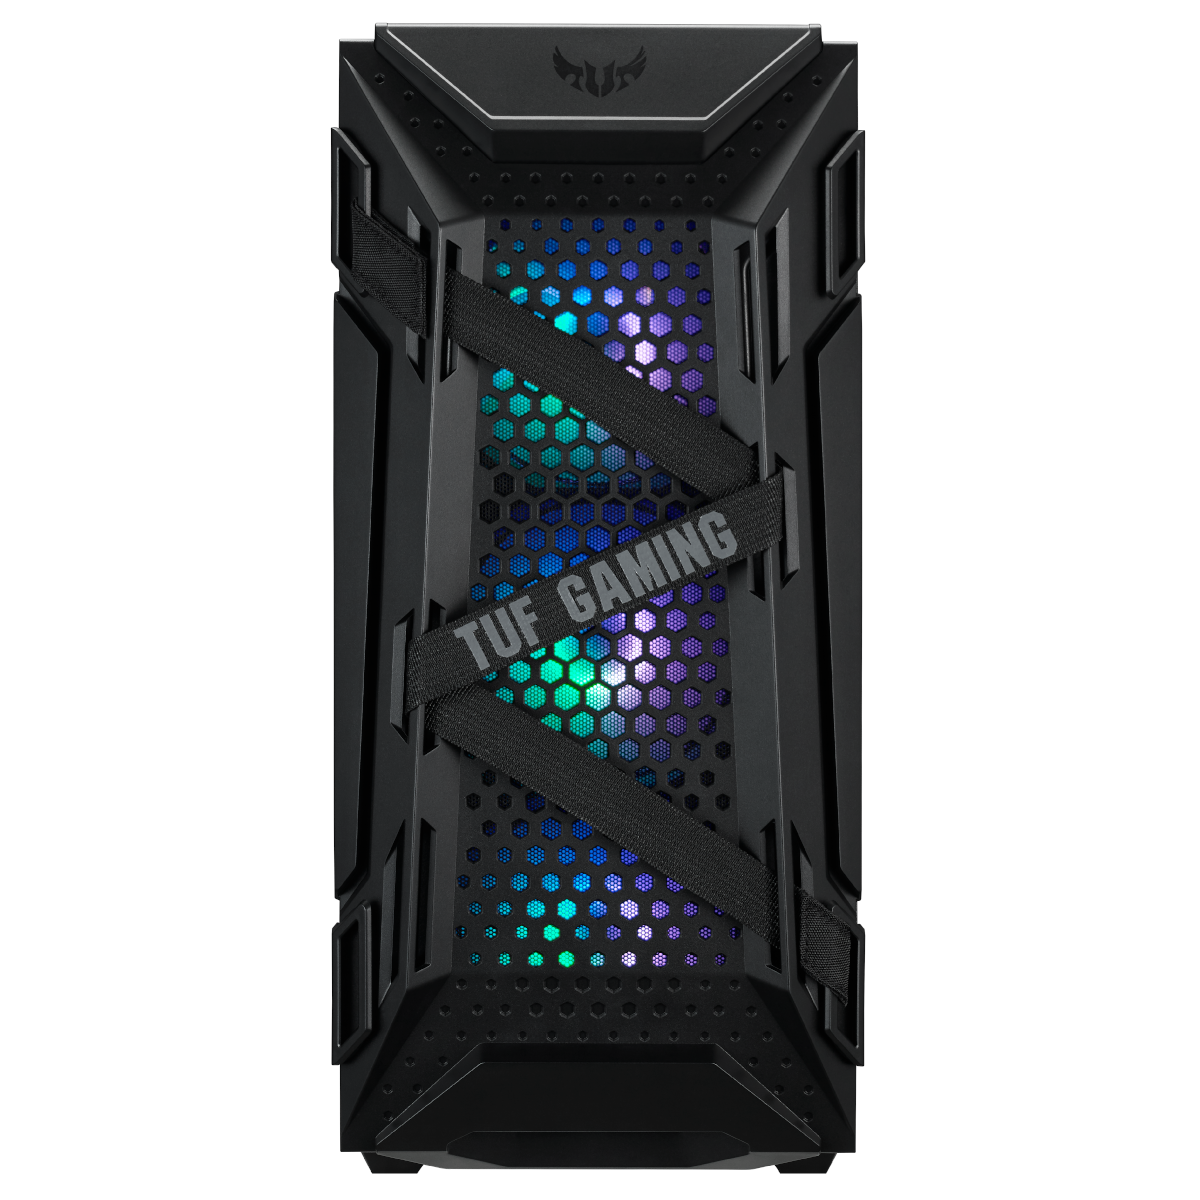 Asus - ASUS TUF Gaming GT301 Midi-Tower Case - Black Tempered Glass